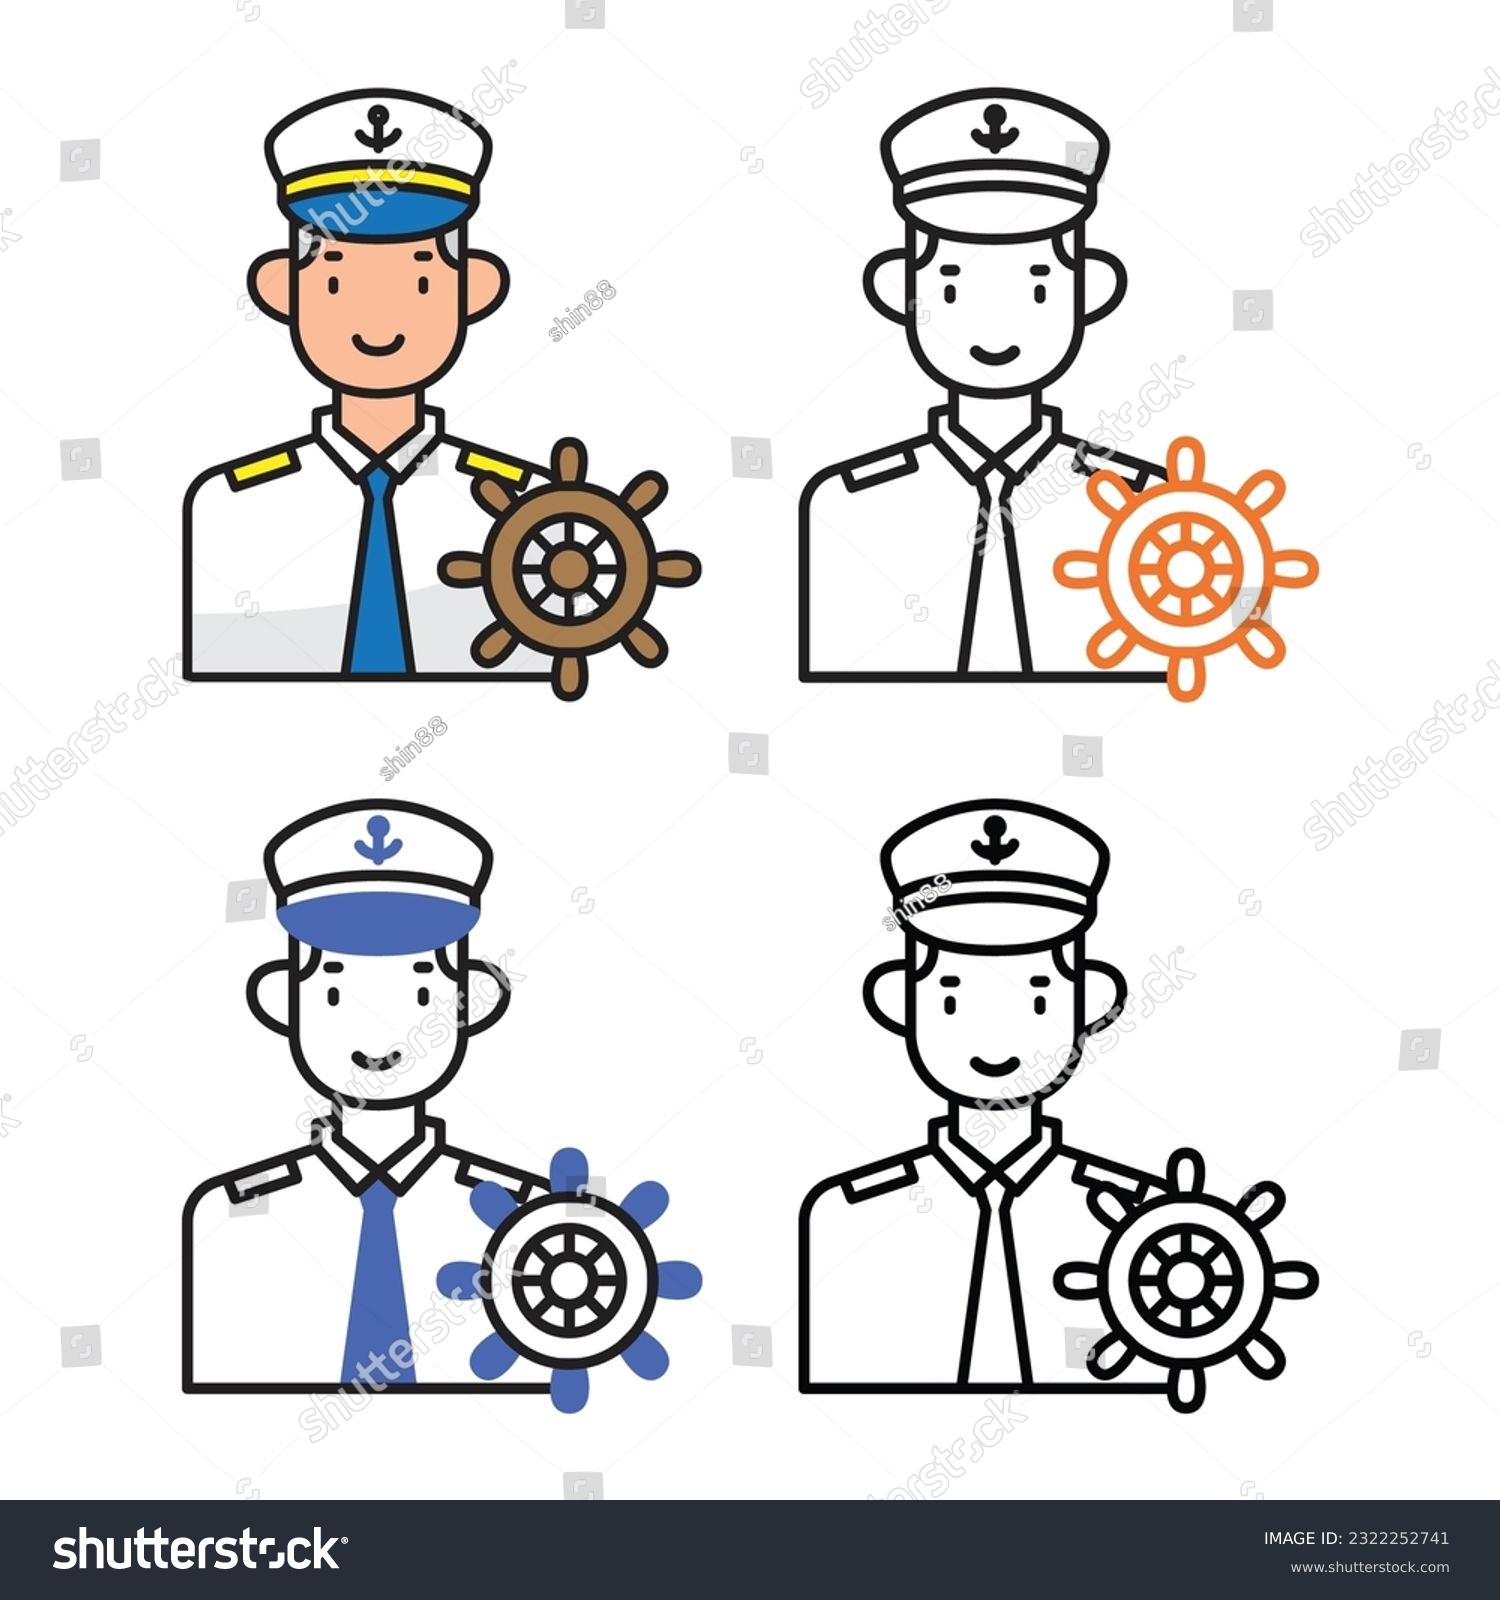 SVG of Ship captain avatar icon design in four variation color svg